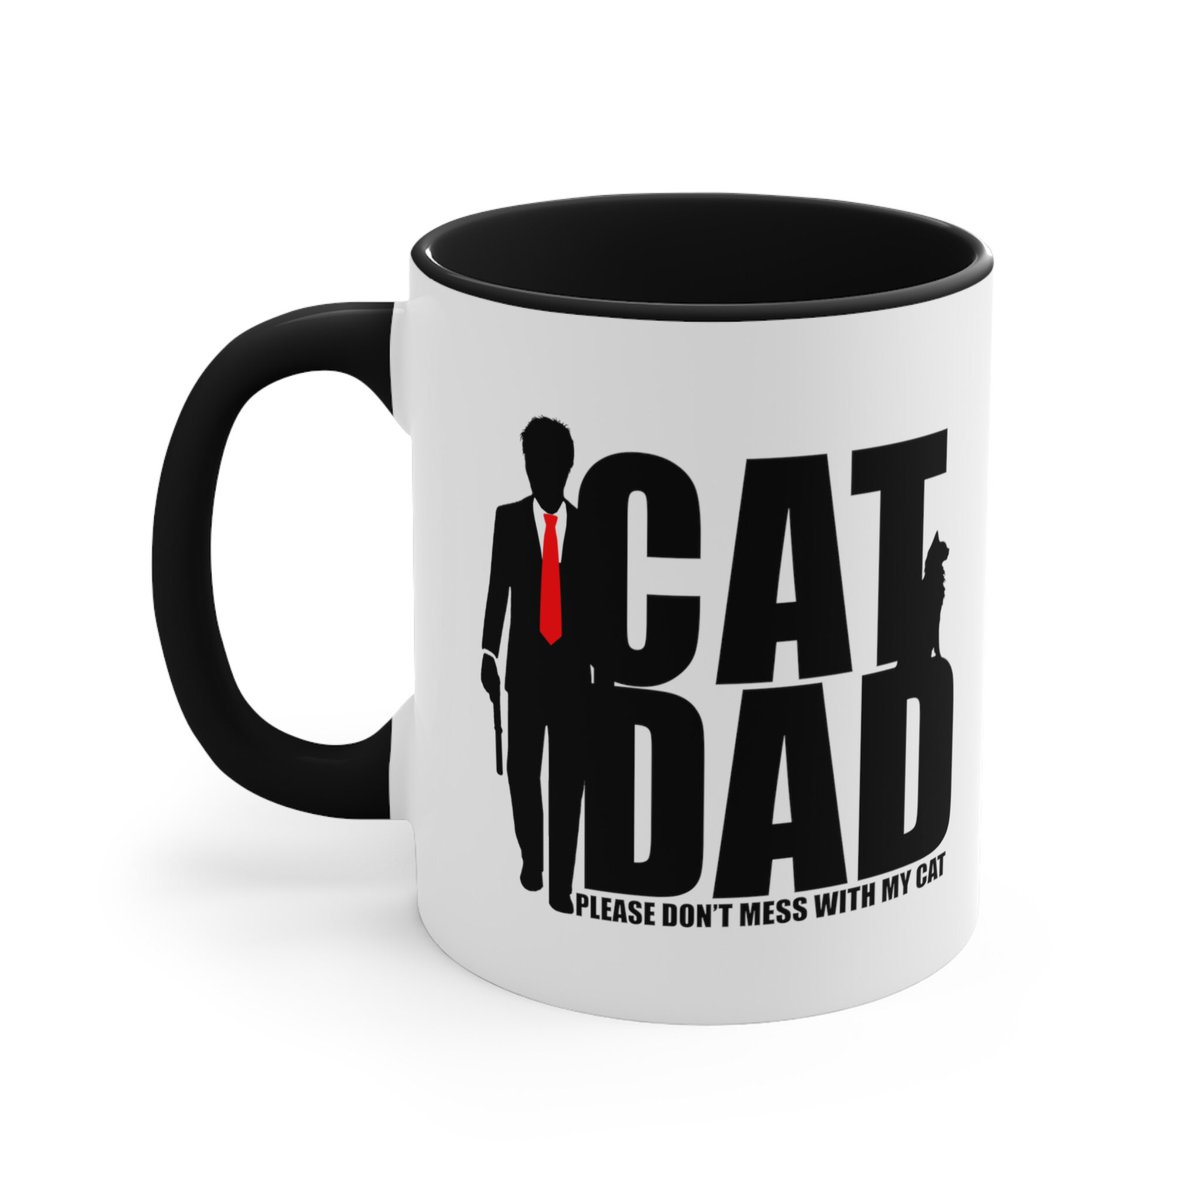 Cat Dad Coffee Mug available in my Etsy shop (link in bio) #coffeetime #cafe #coffeelover #coffeeshop #mugs #love #coffeeaddict #breakfast #espresso #coffeelovers #coffeemug #coffeeholic #barista #tea #coffeegram #etsy #etsyshop #latteart #specialtycoffee #teamug #coffeebreak